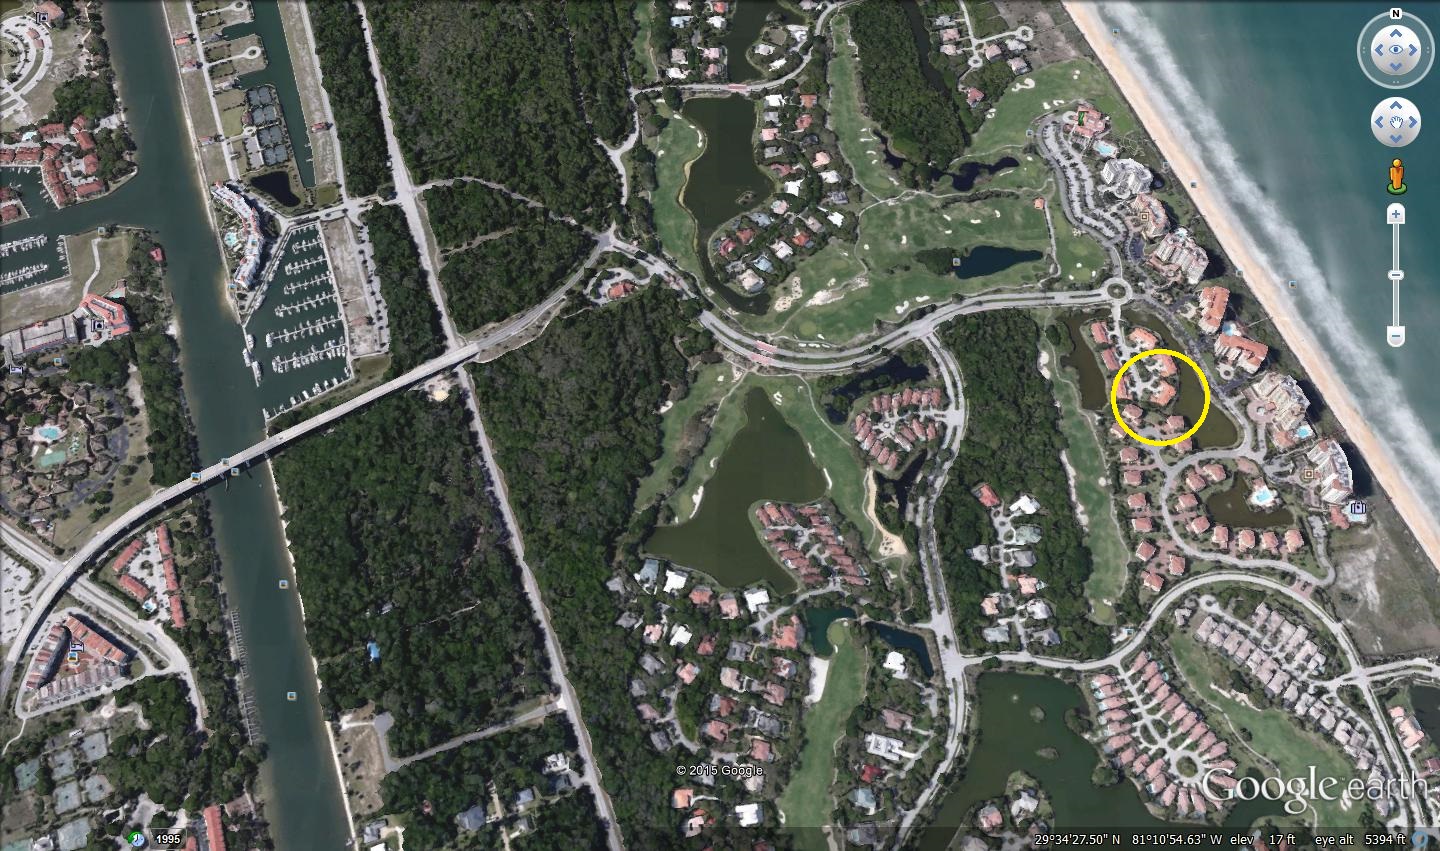 23 Viscaya Lane - Google Earth